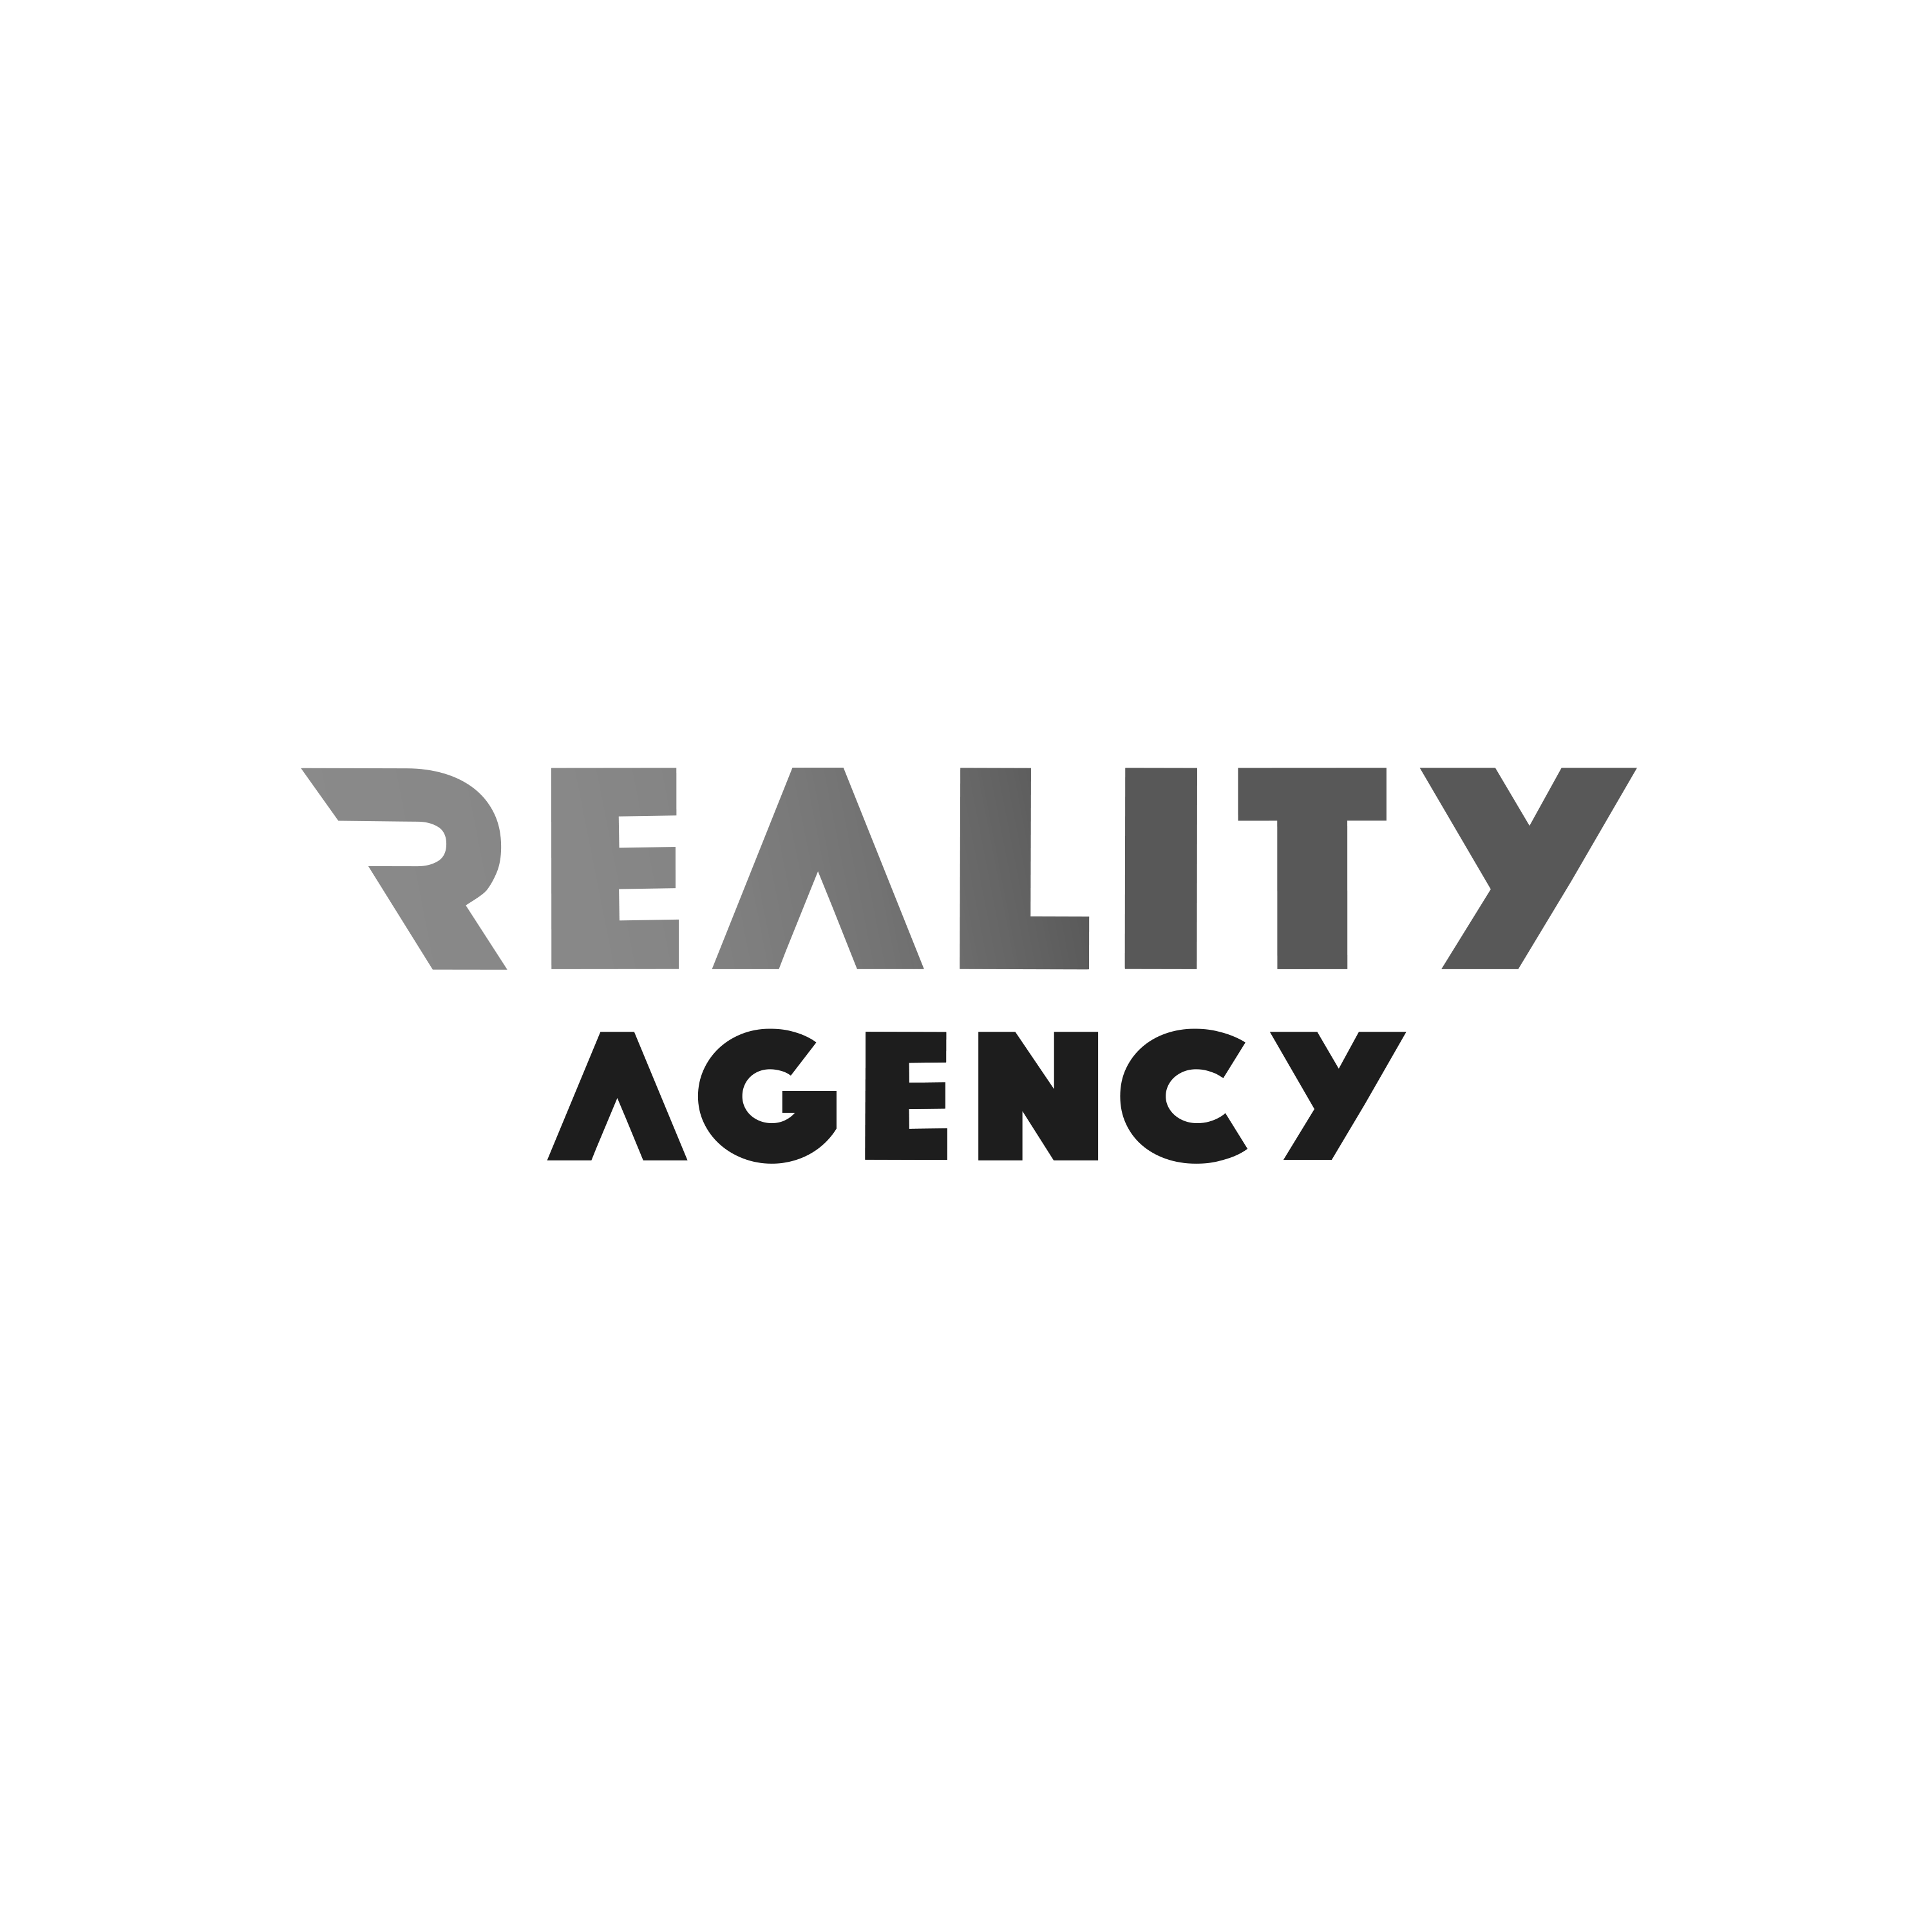 Reality Agency